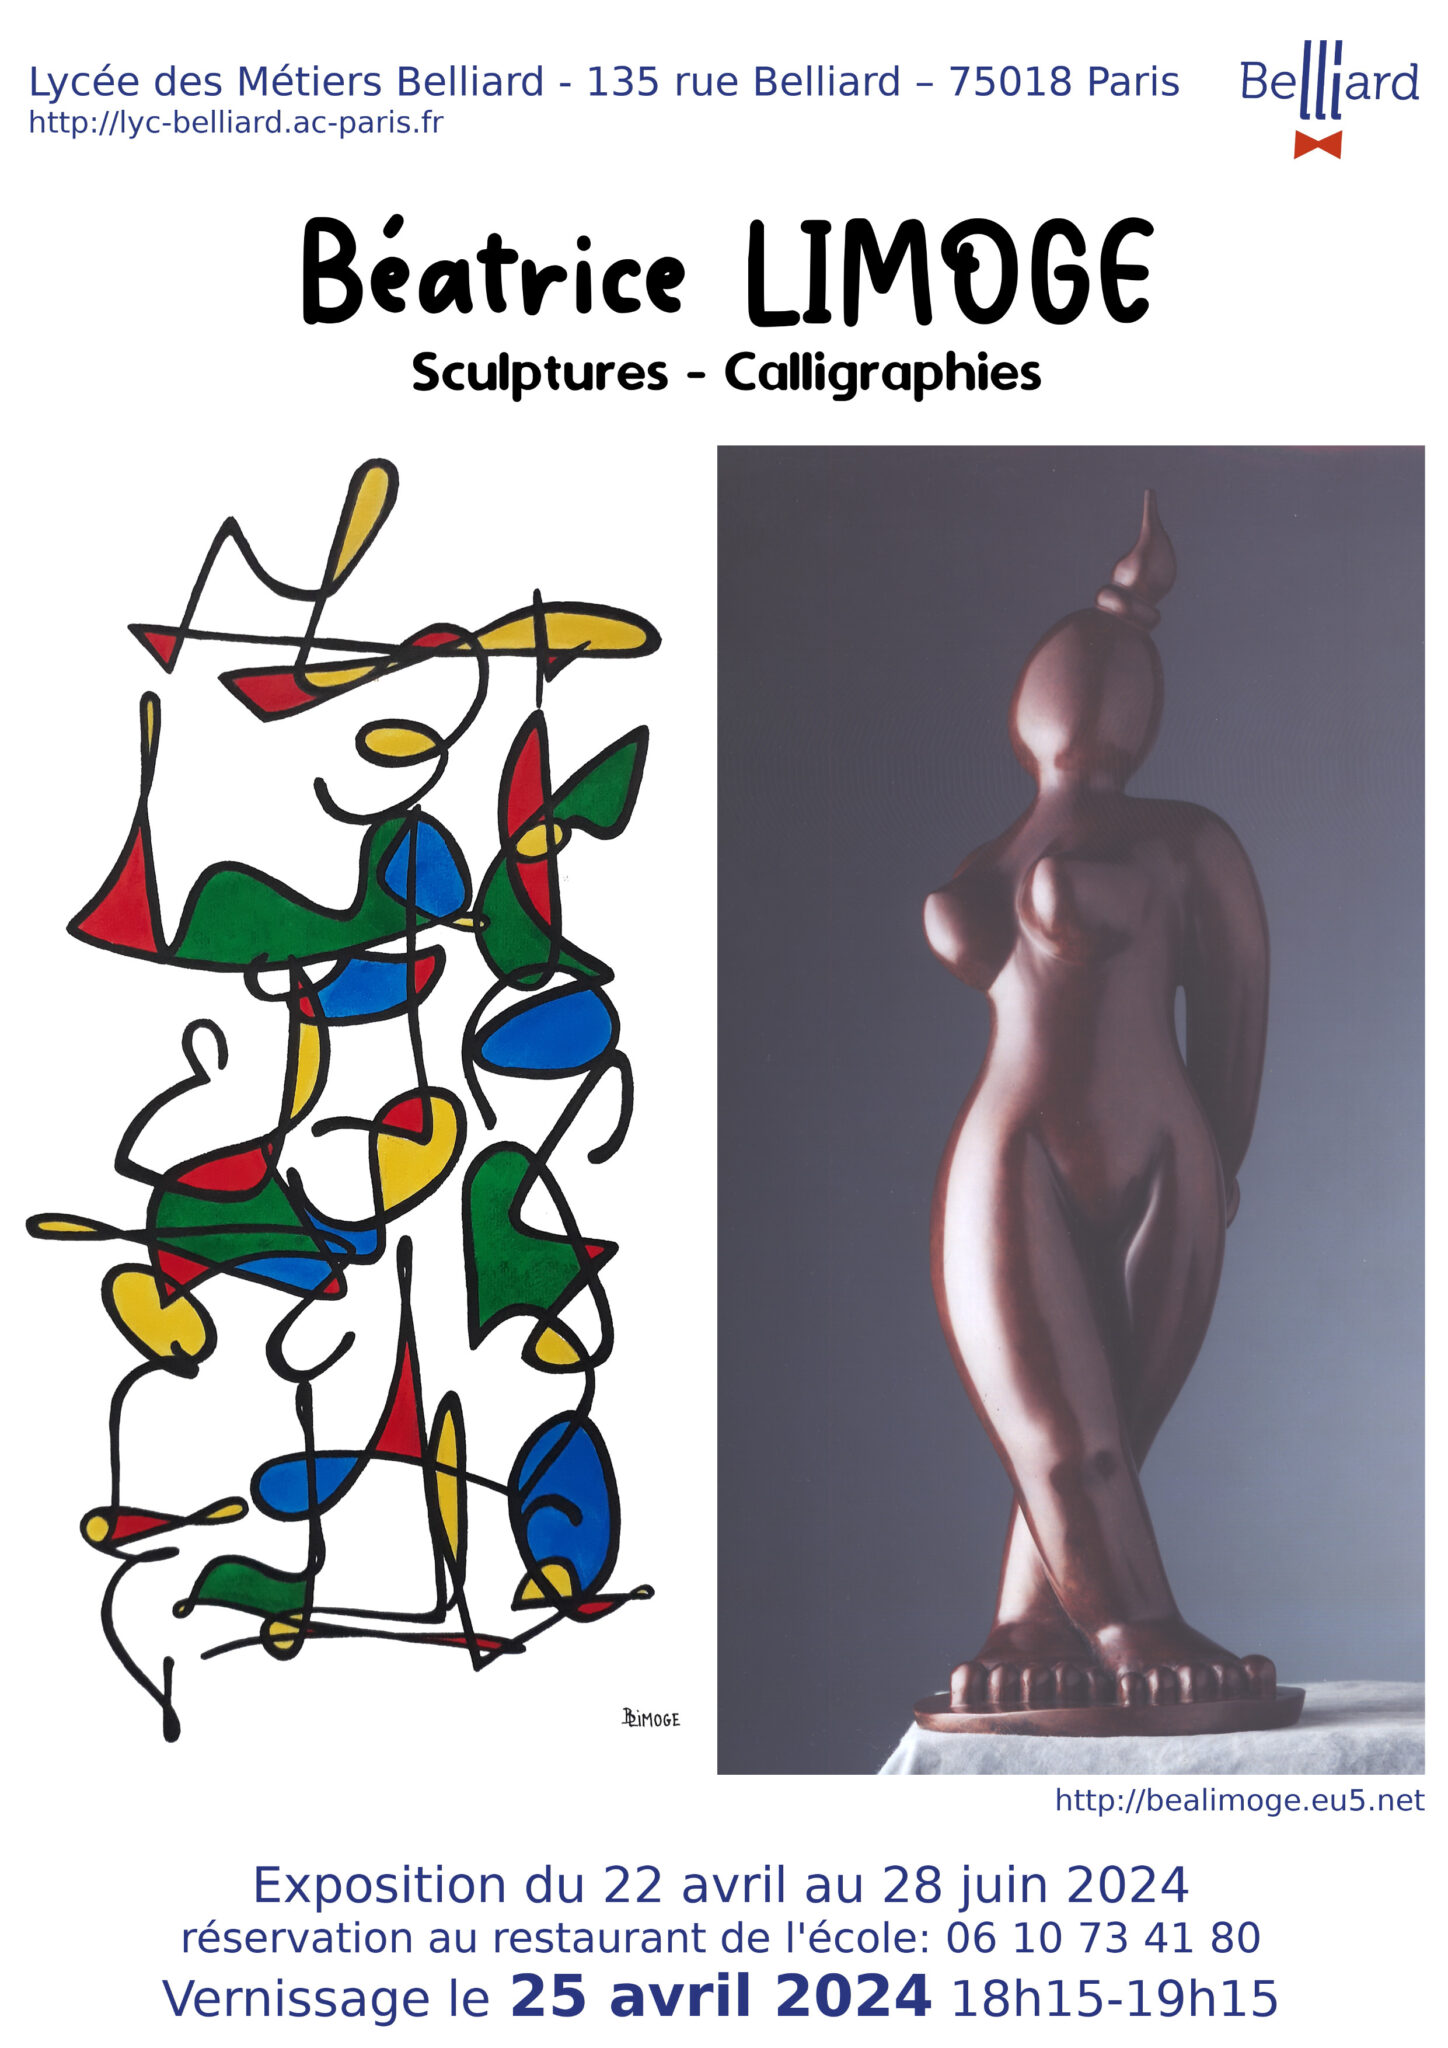 Sculptures - Calligraphies